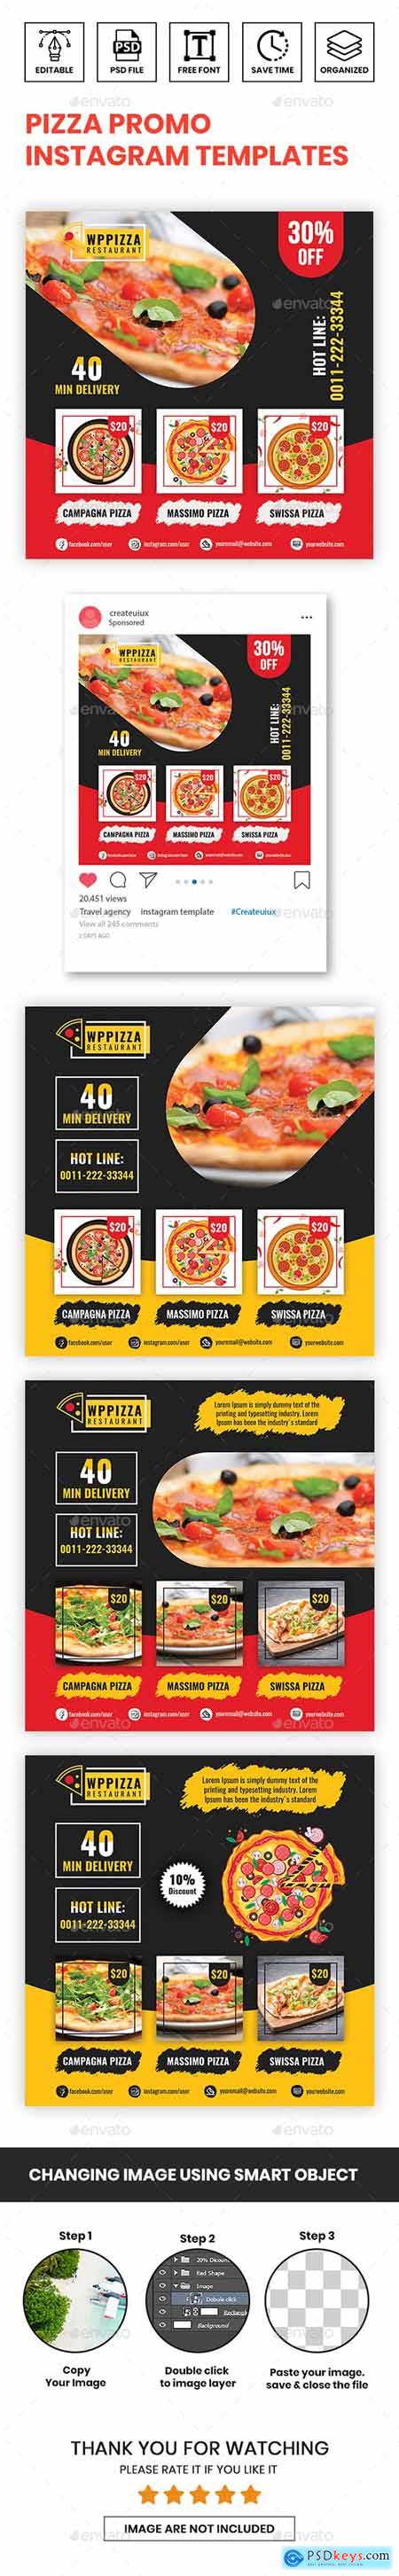 Pizza Promo Instagram Templates